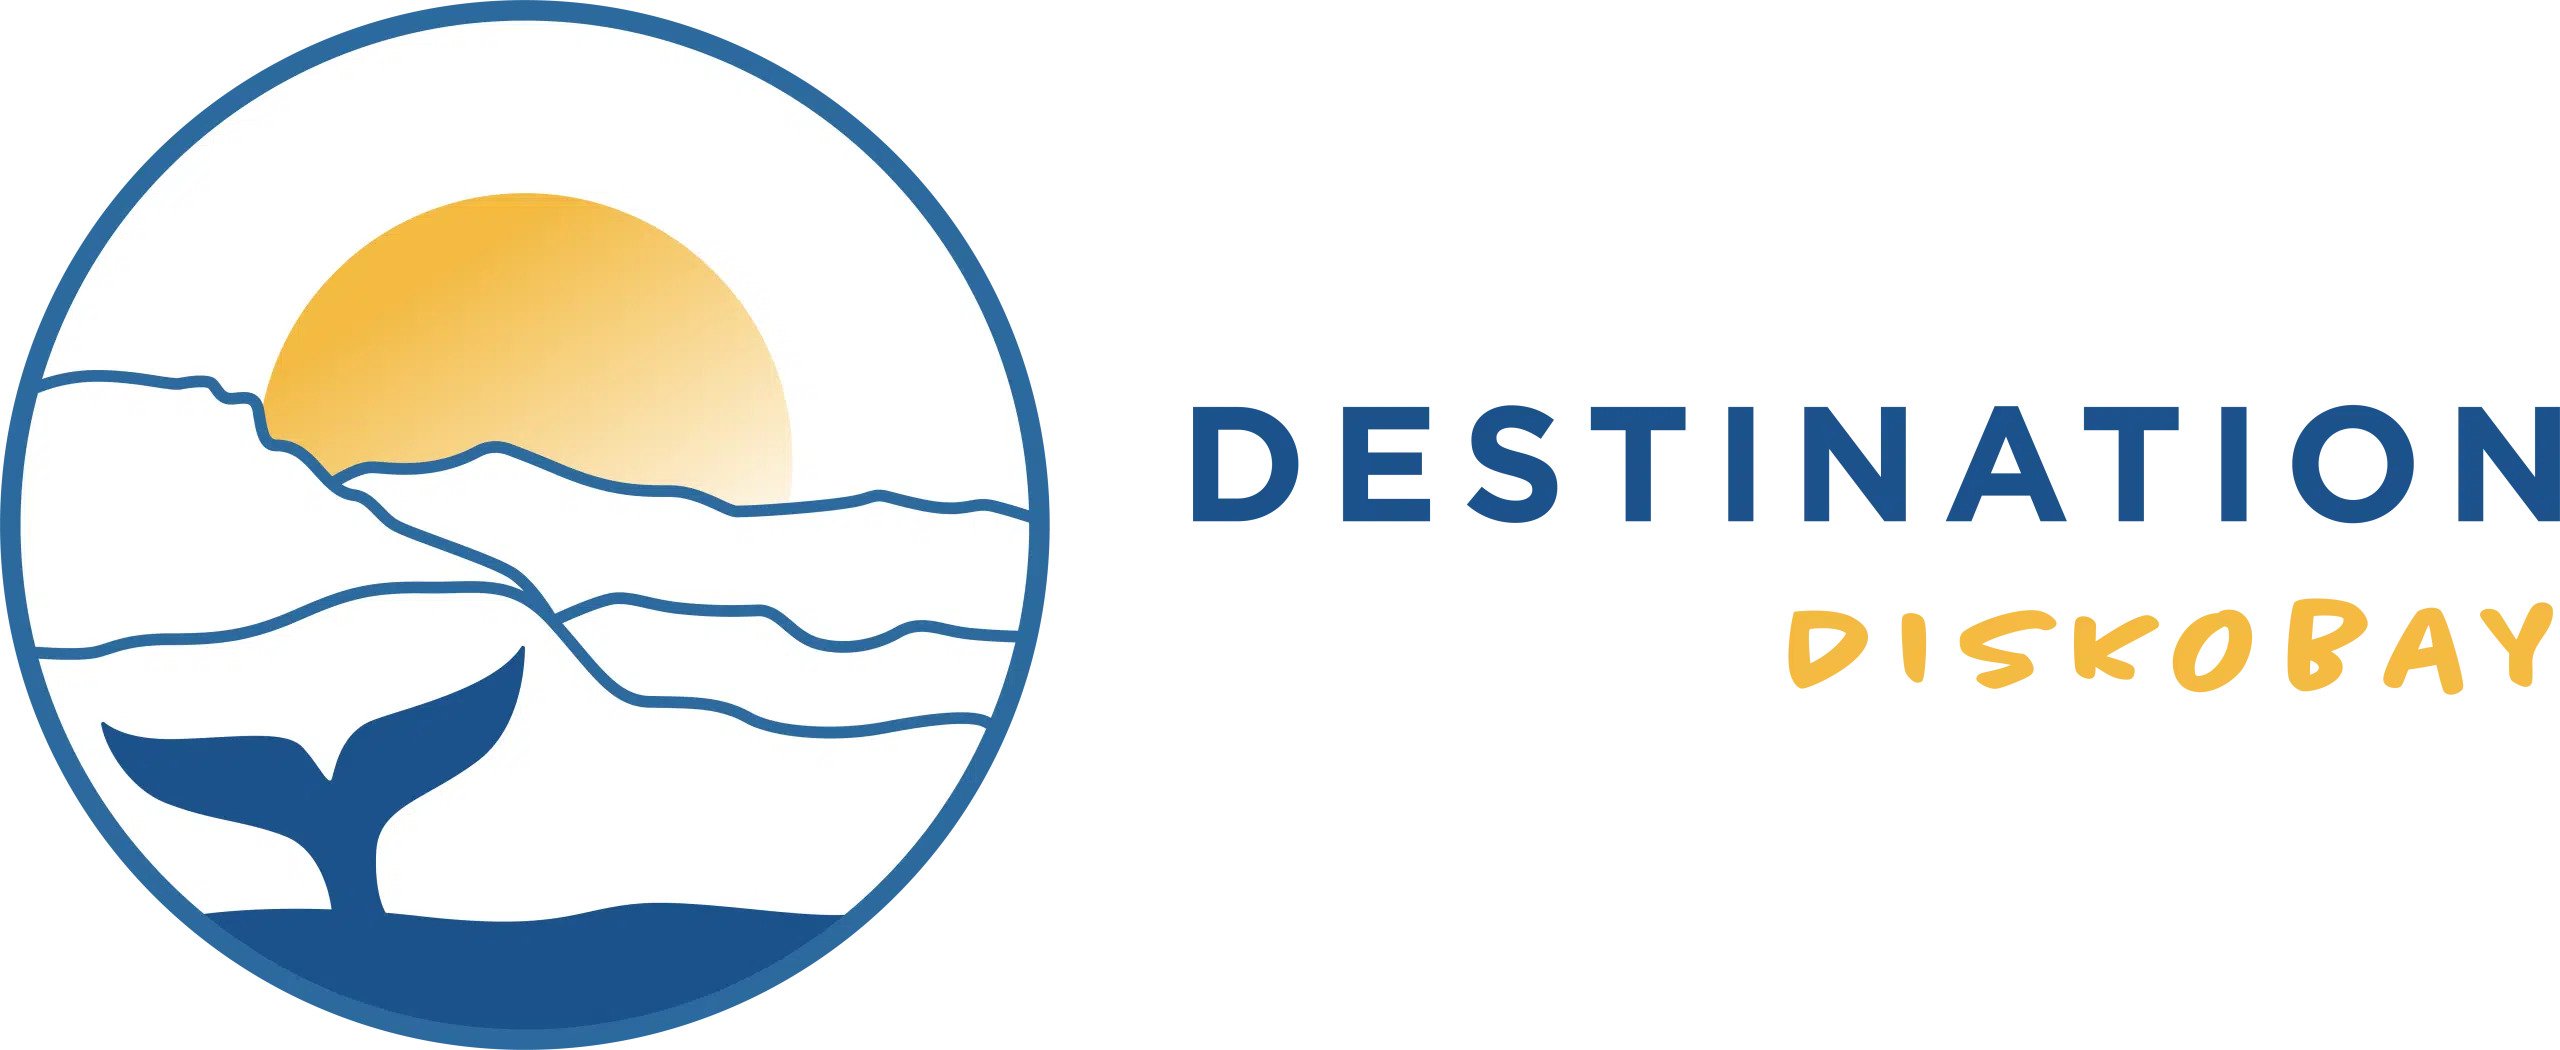 Destination Diskobay logo